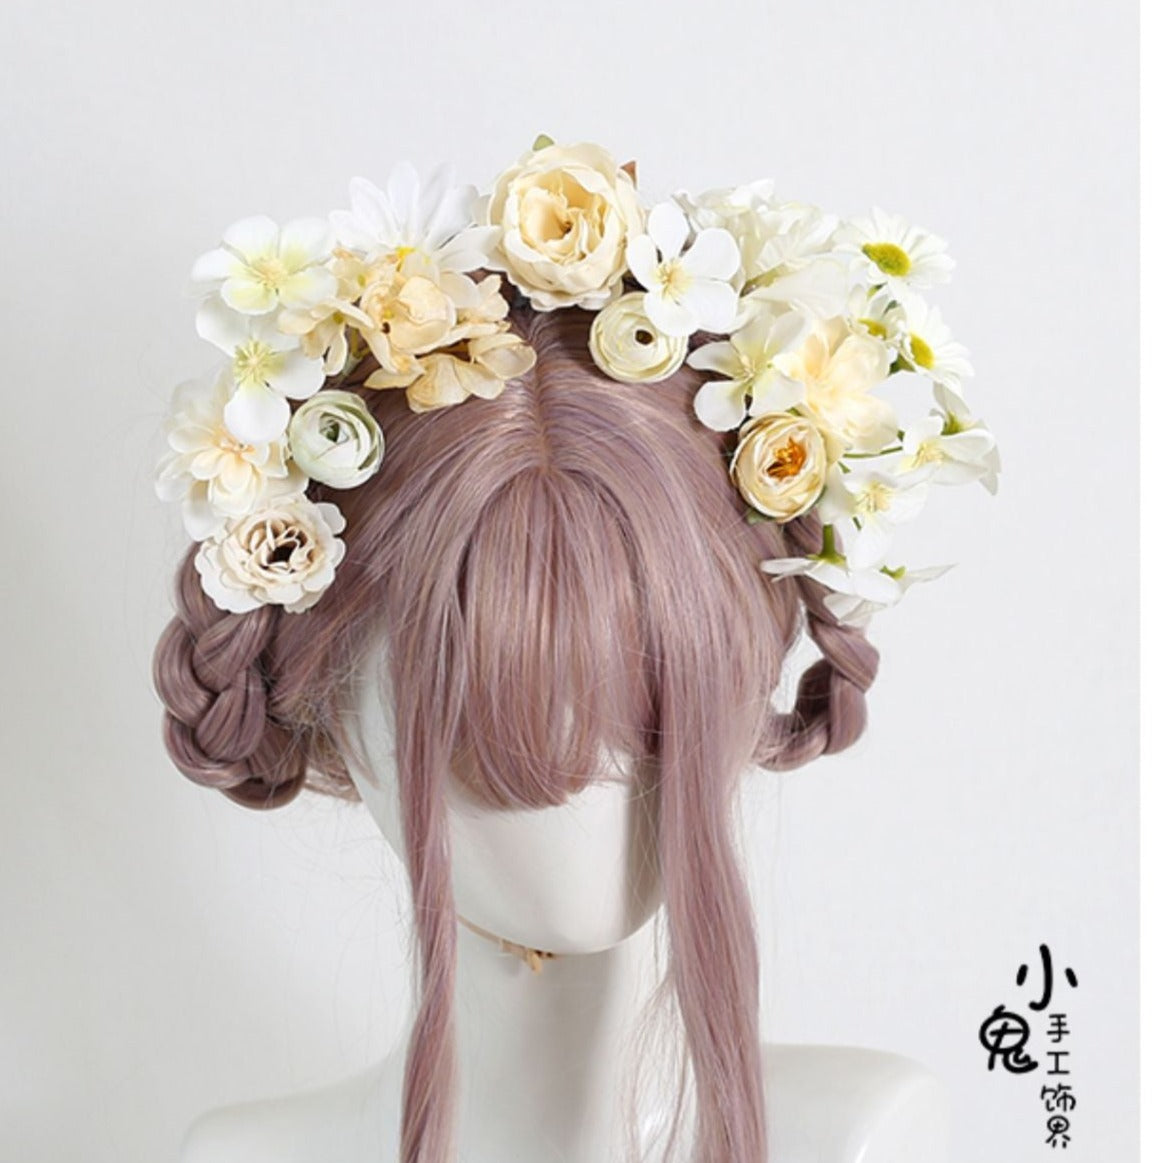 Blooming Pretty Hair Accessory Set Sweet Lolita Japanese Lolita Lolita! 12 types in total